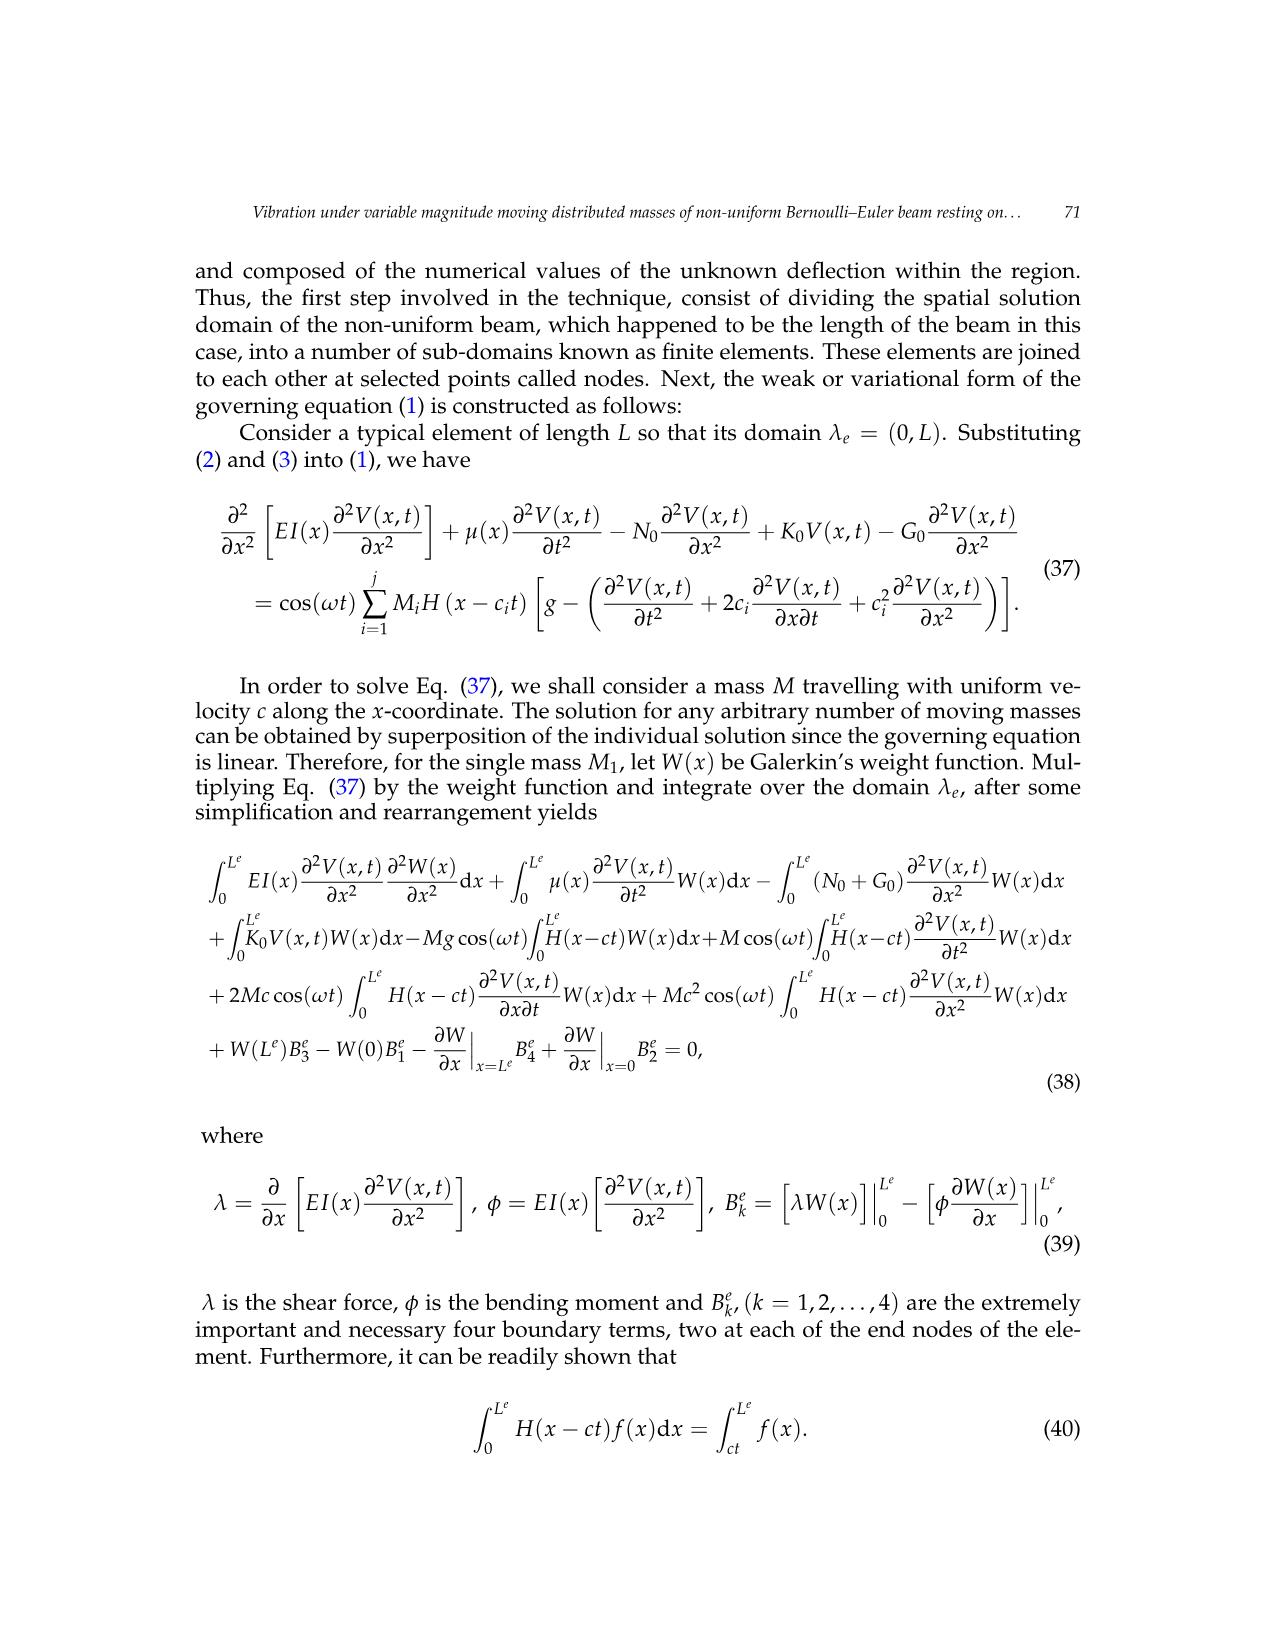 Vibration under variable magnitude moving distributed masses of non-uniform bernoulli–euler beam resting on pasternak elastic foundation trang 9